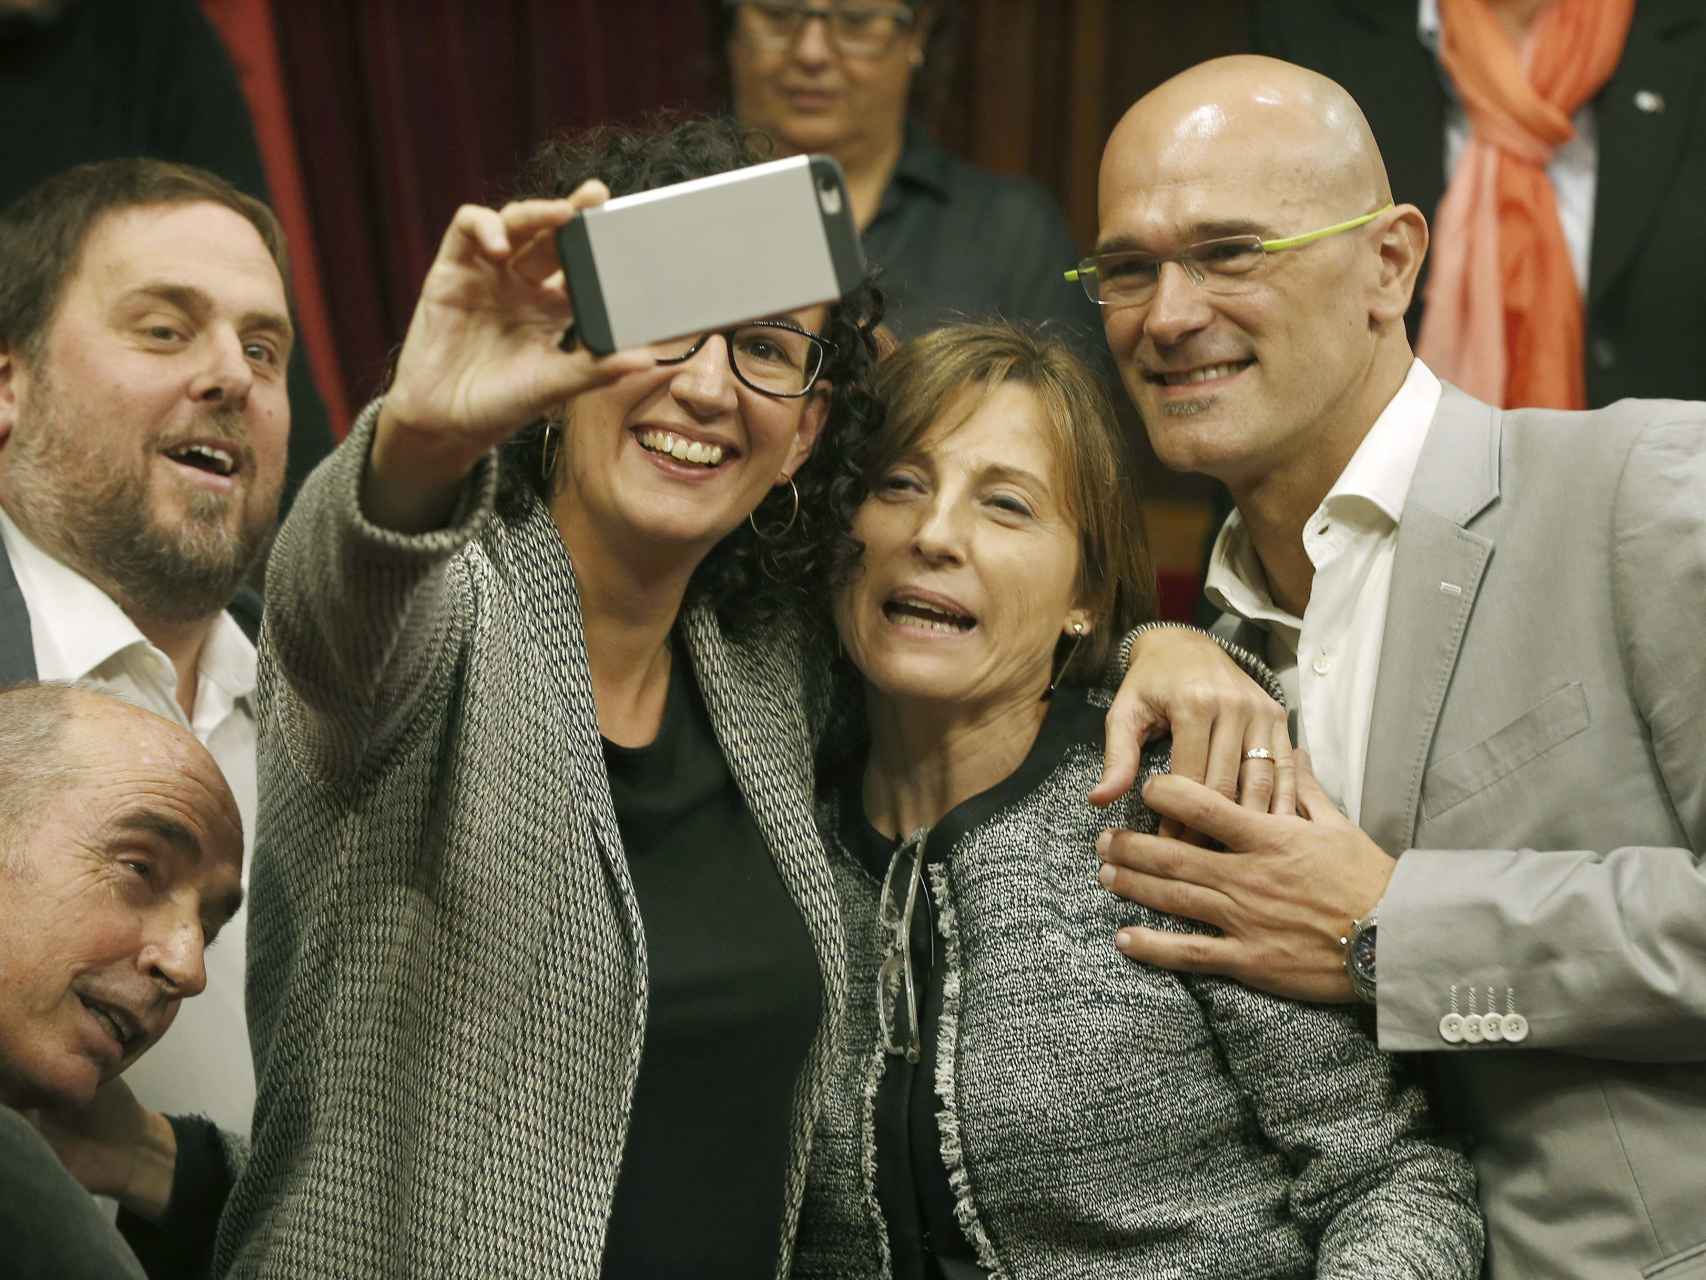 Los diputados de Junts pel Sí, Lluís LLach, Oriol Junqueras, Marta Rovira y Raül Romeva, se fotografían junto a Carme Forcadell.